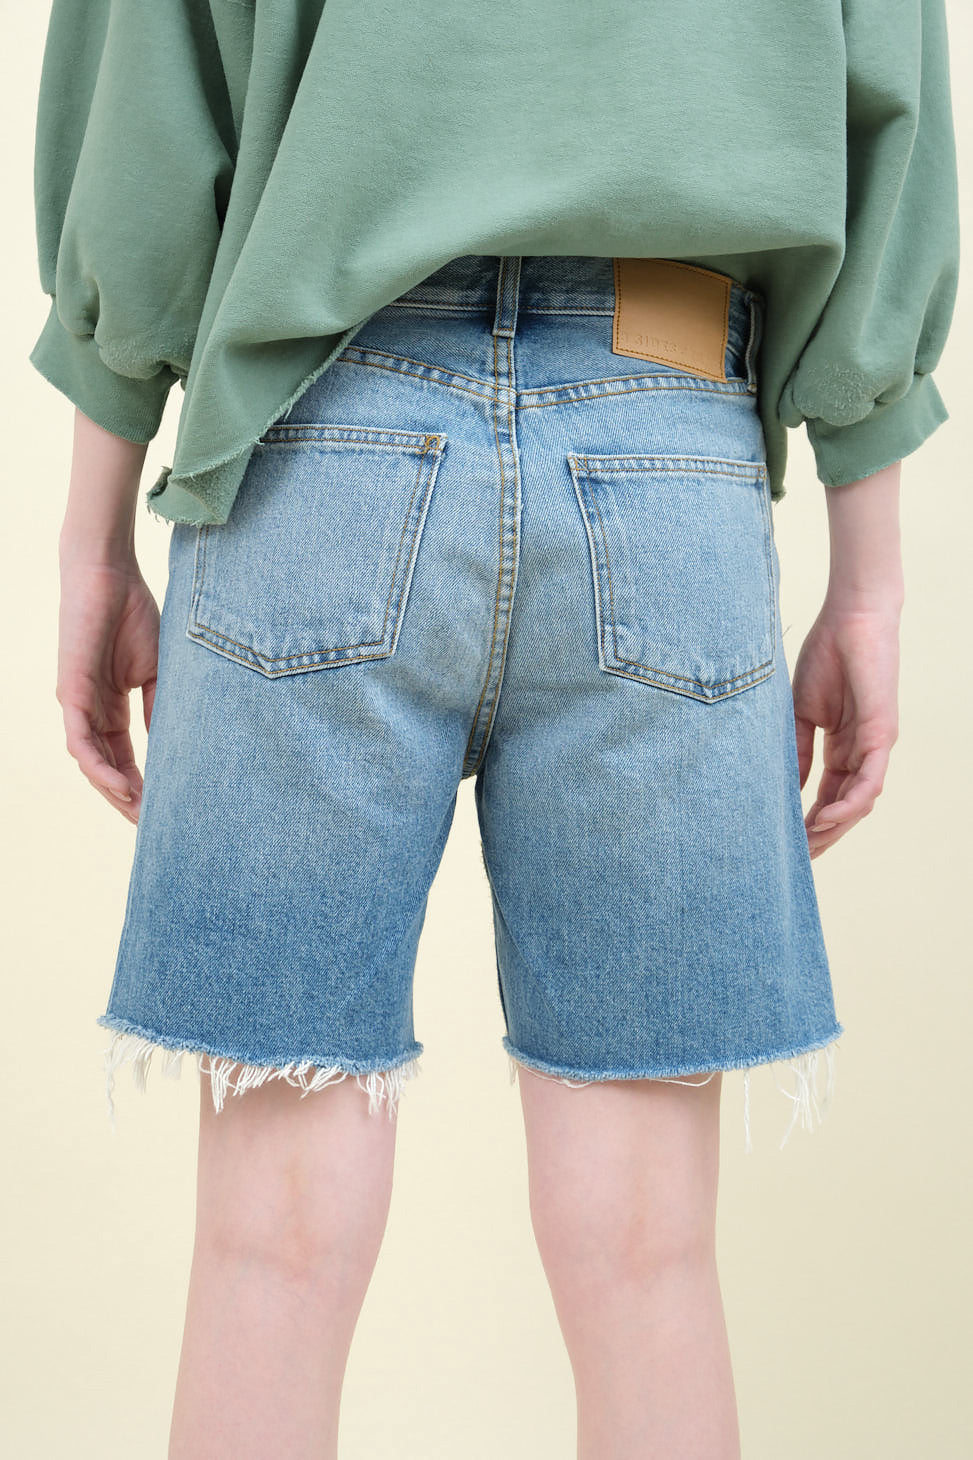 Women's Shorts: Baggy, Jorts, Mom, Long, & More